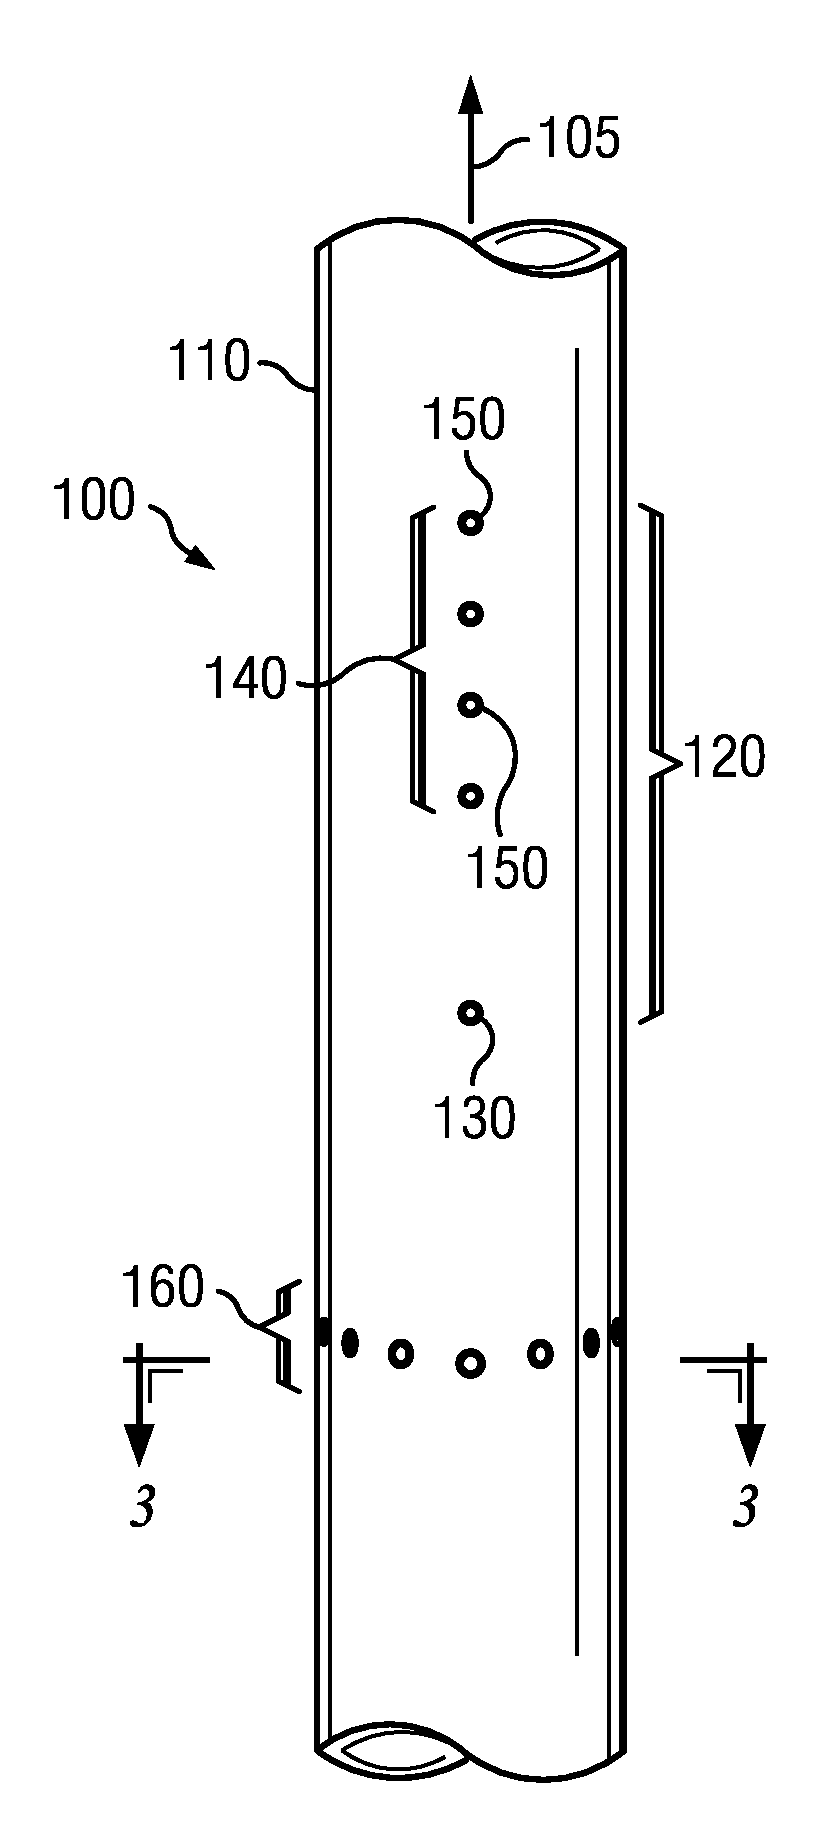 Downhole elastic anisotropy measurements